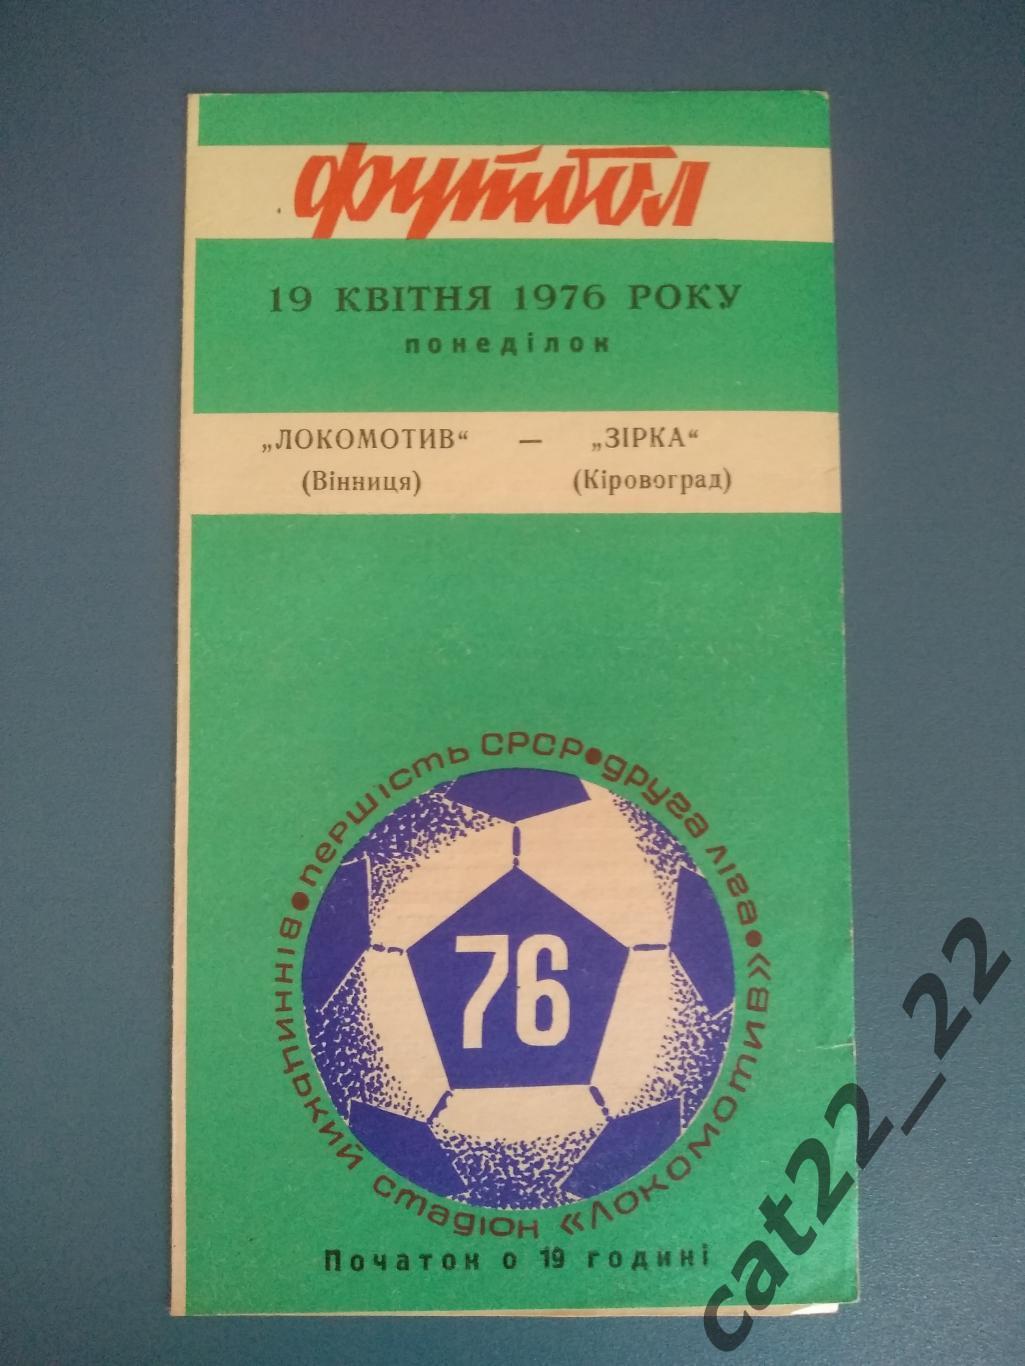 Локомотив Винница - Звезда/Зирка Кировоград 1976